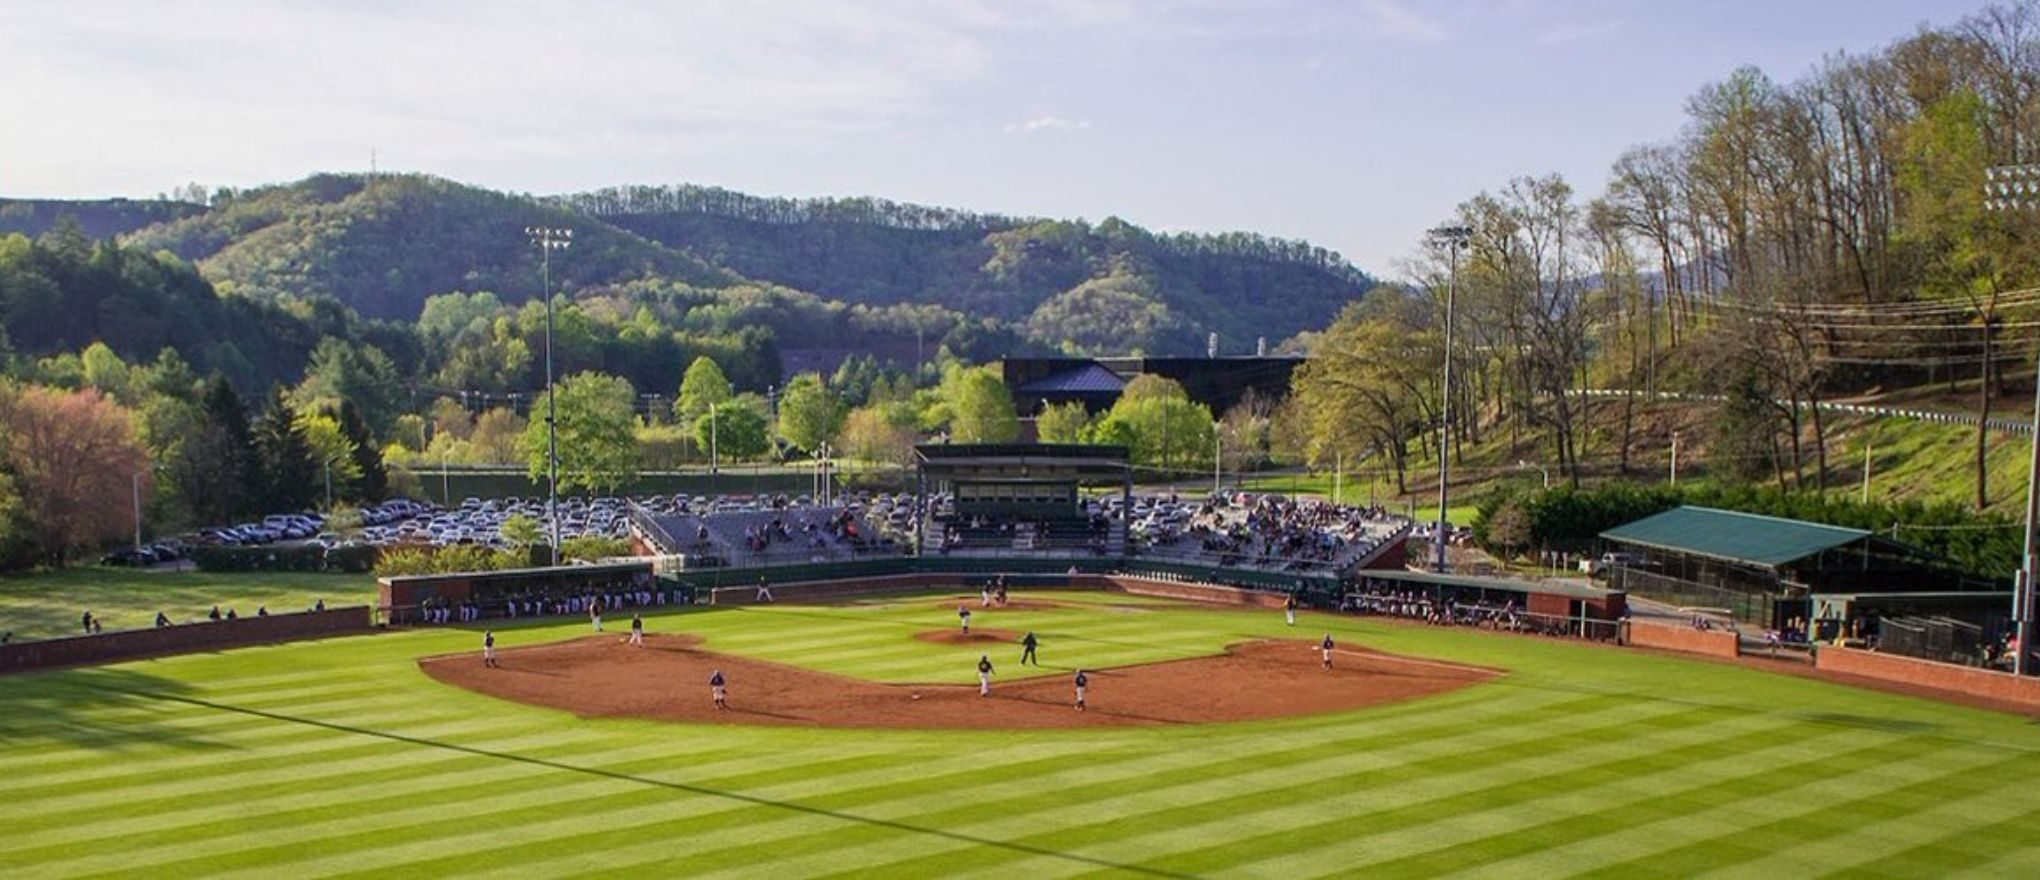 Western Carolina Baseball Camps